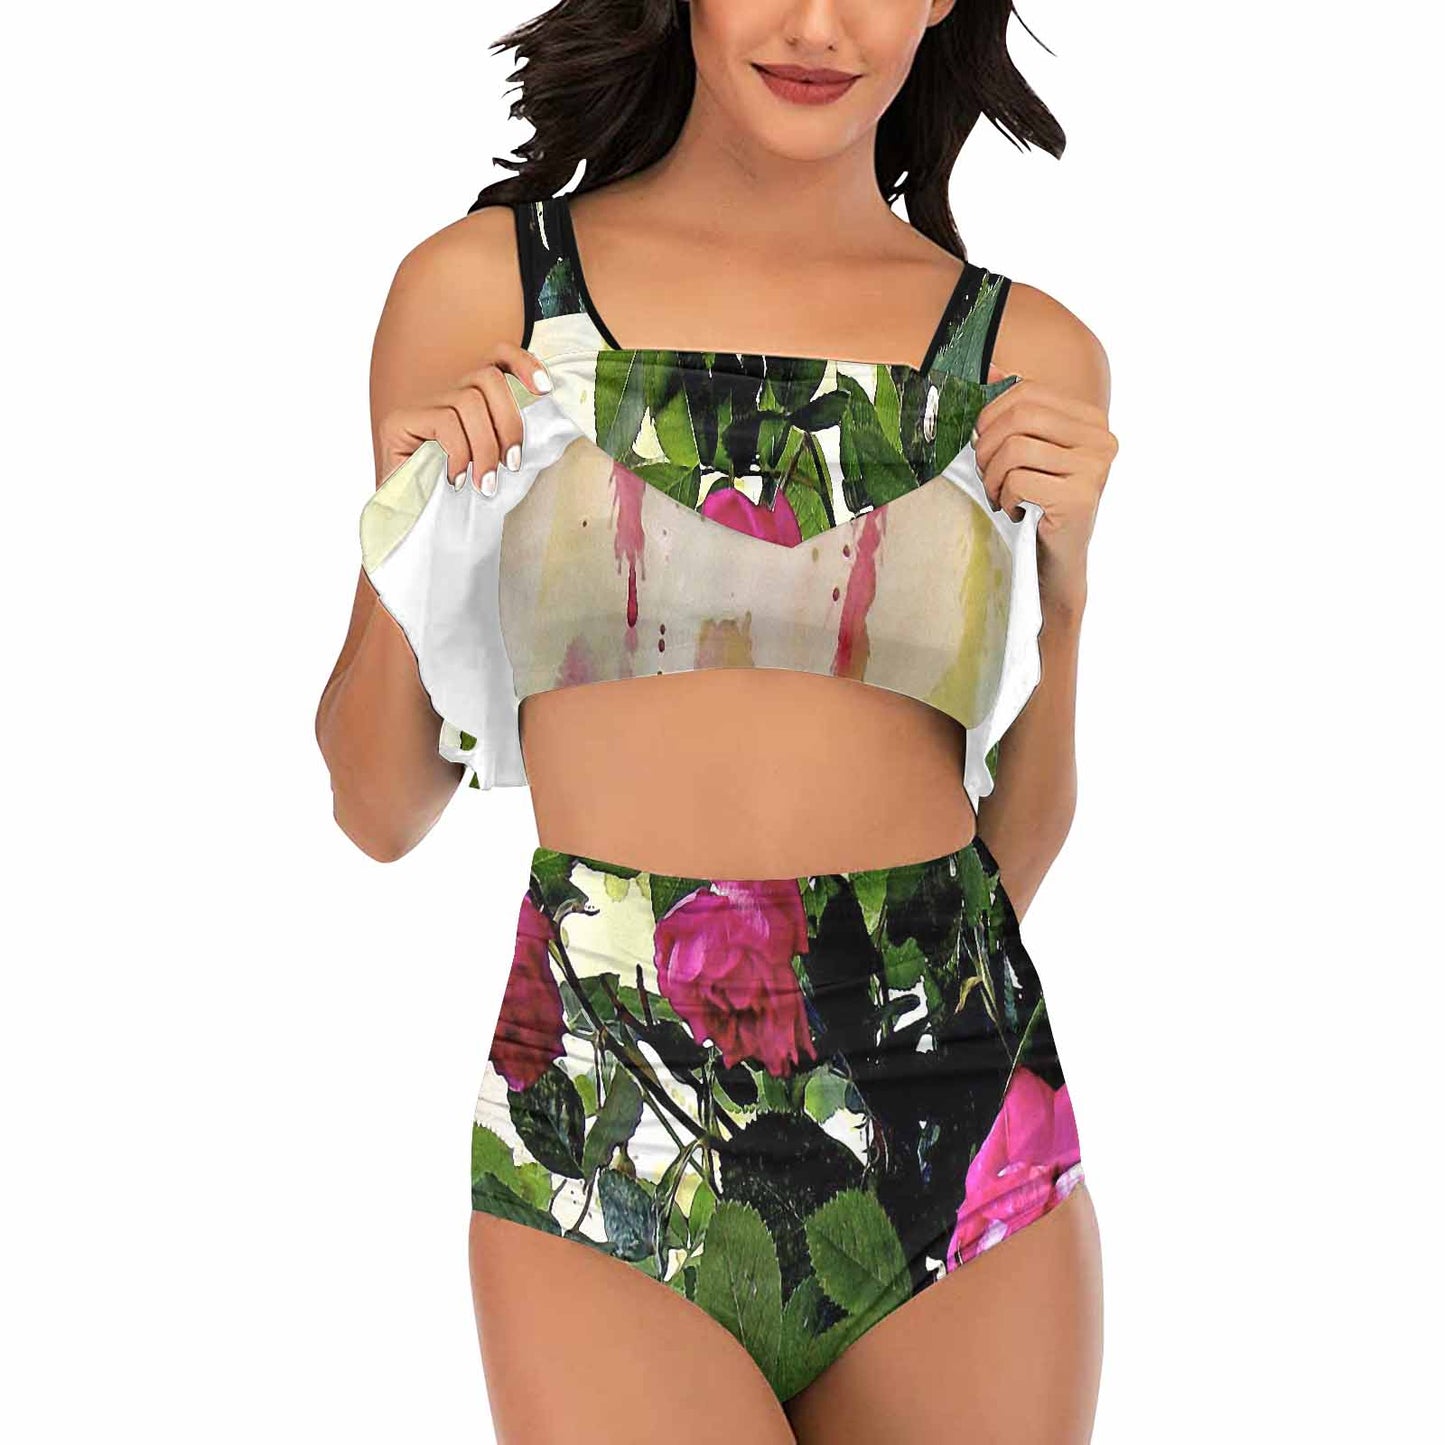 Vintage floral high waisted flounce top bikini, swim wear, Design 22